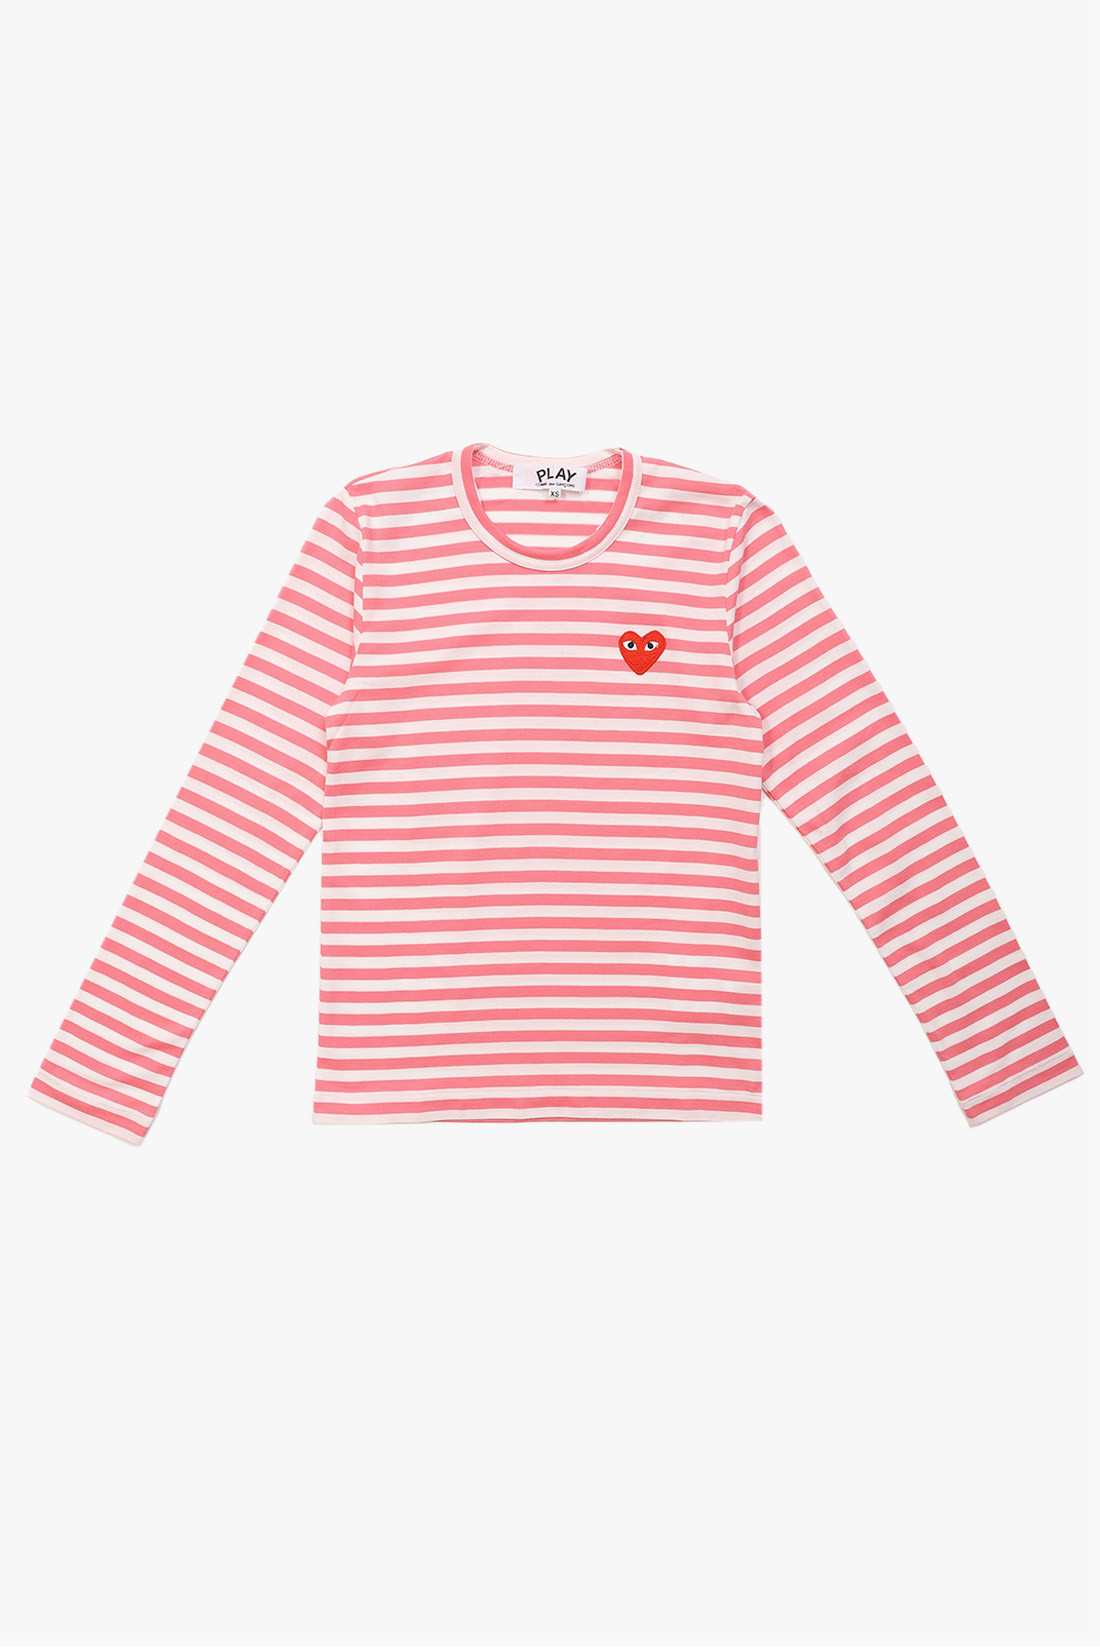 Play ladies striped t-shirt Pink/white